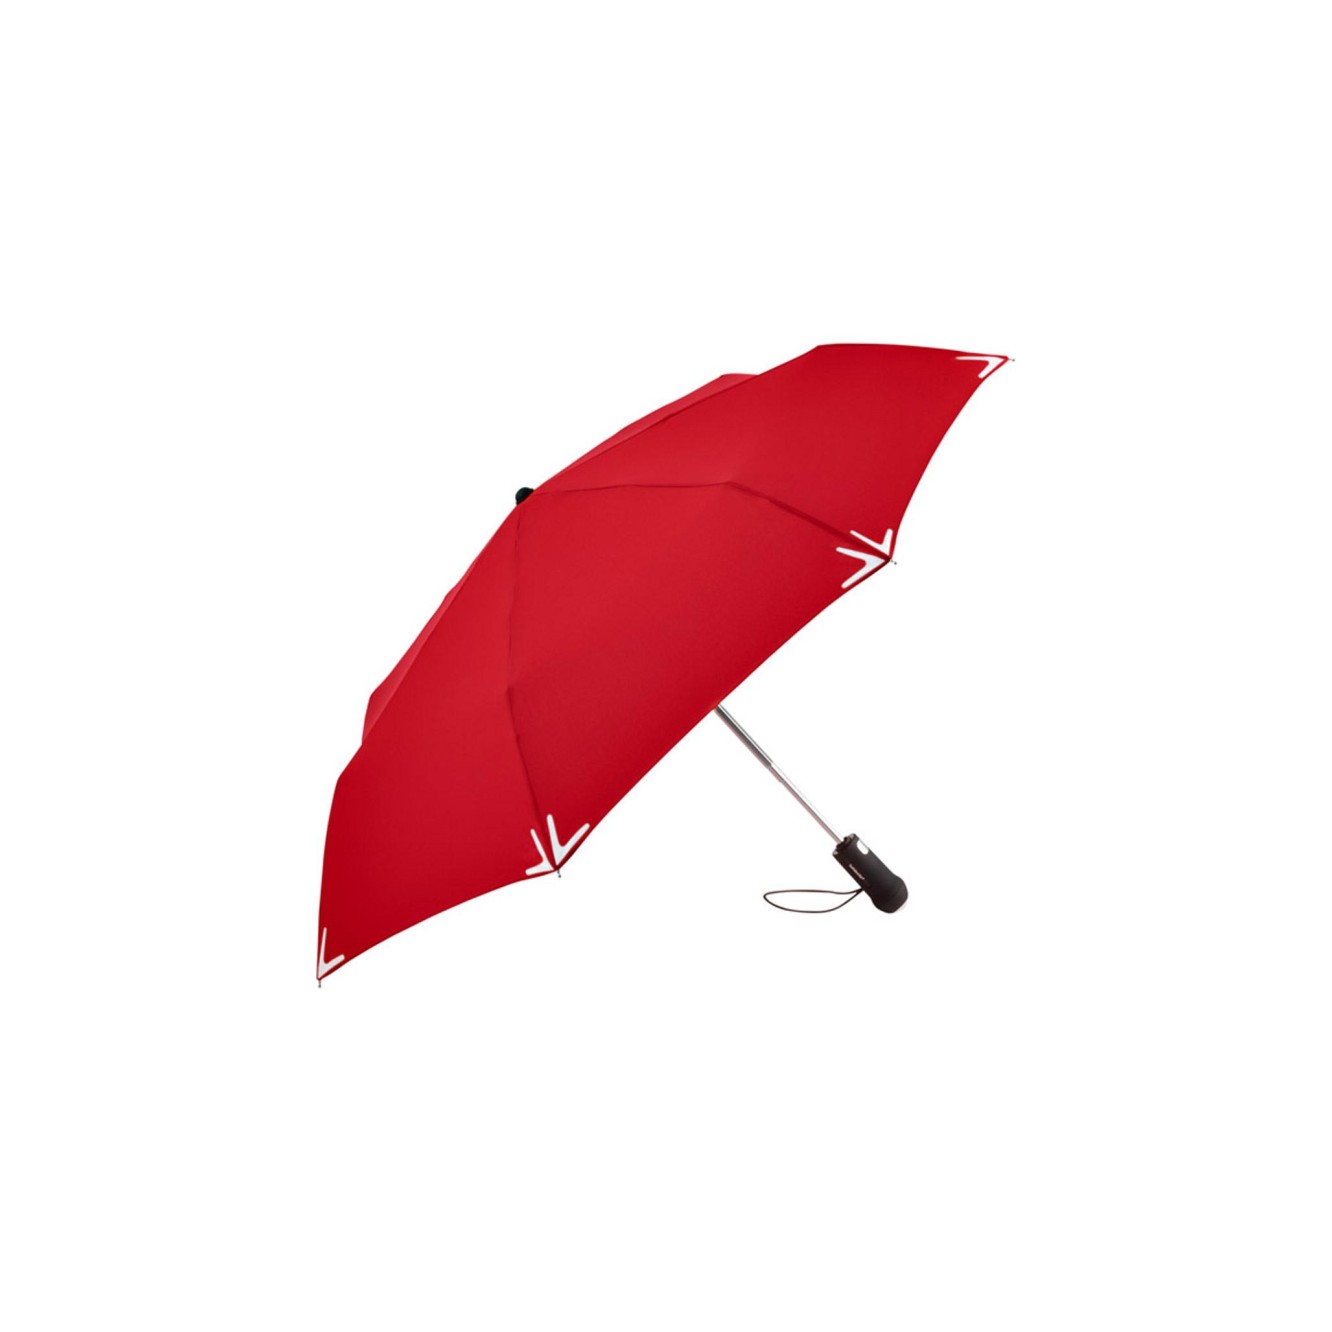 AOC mini umbrella Safebrella LED